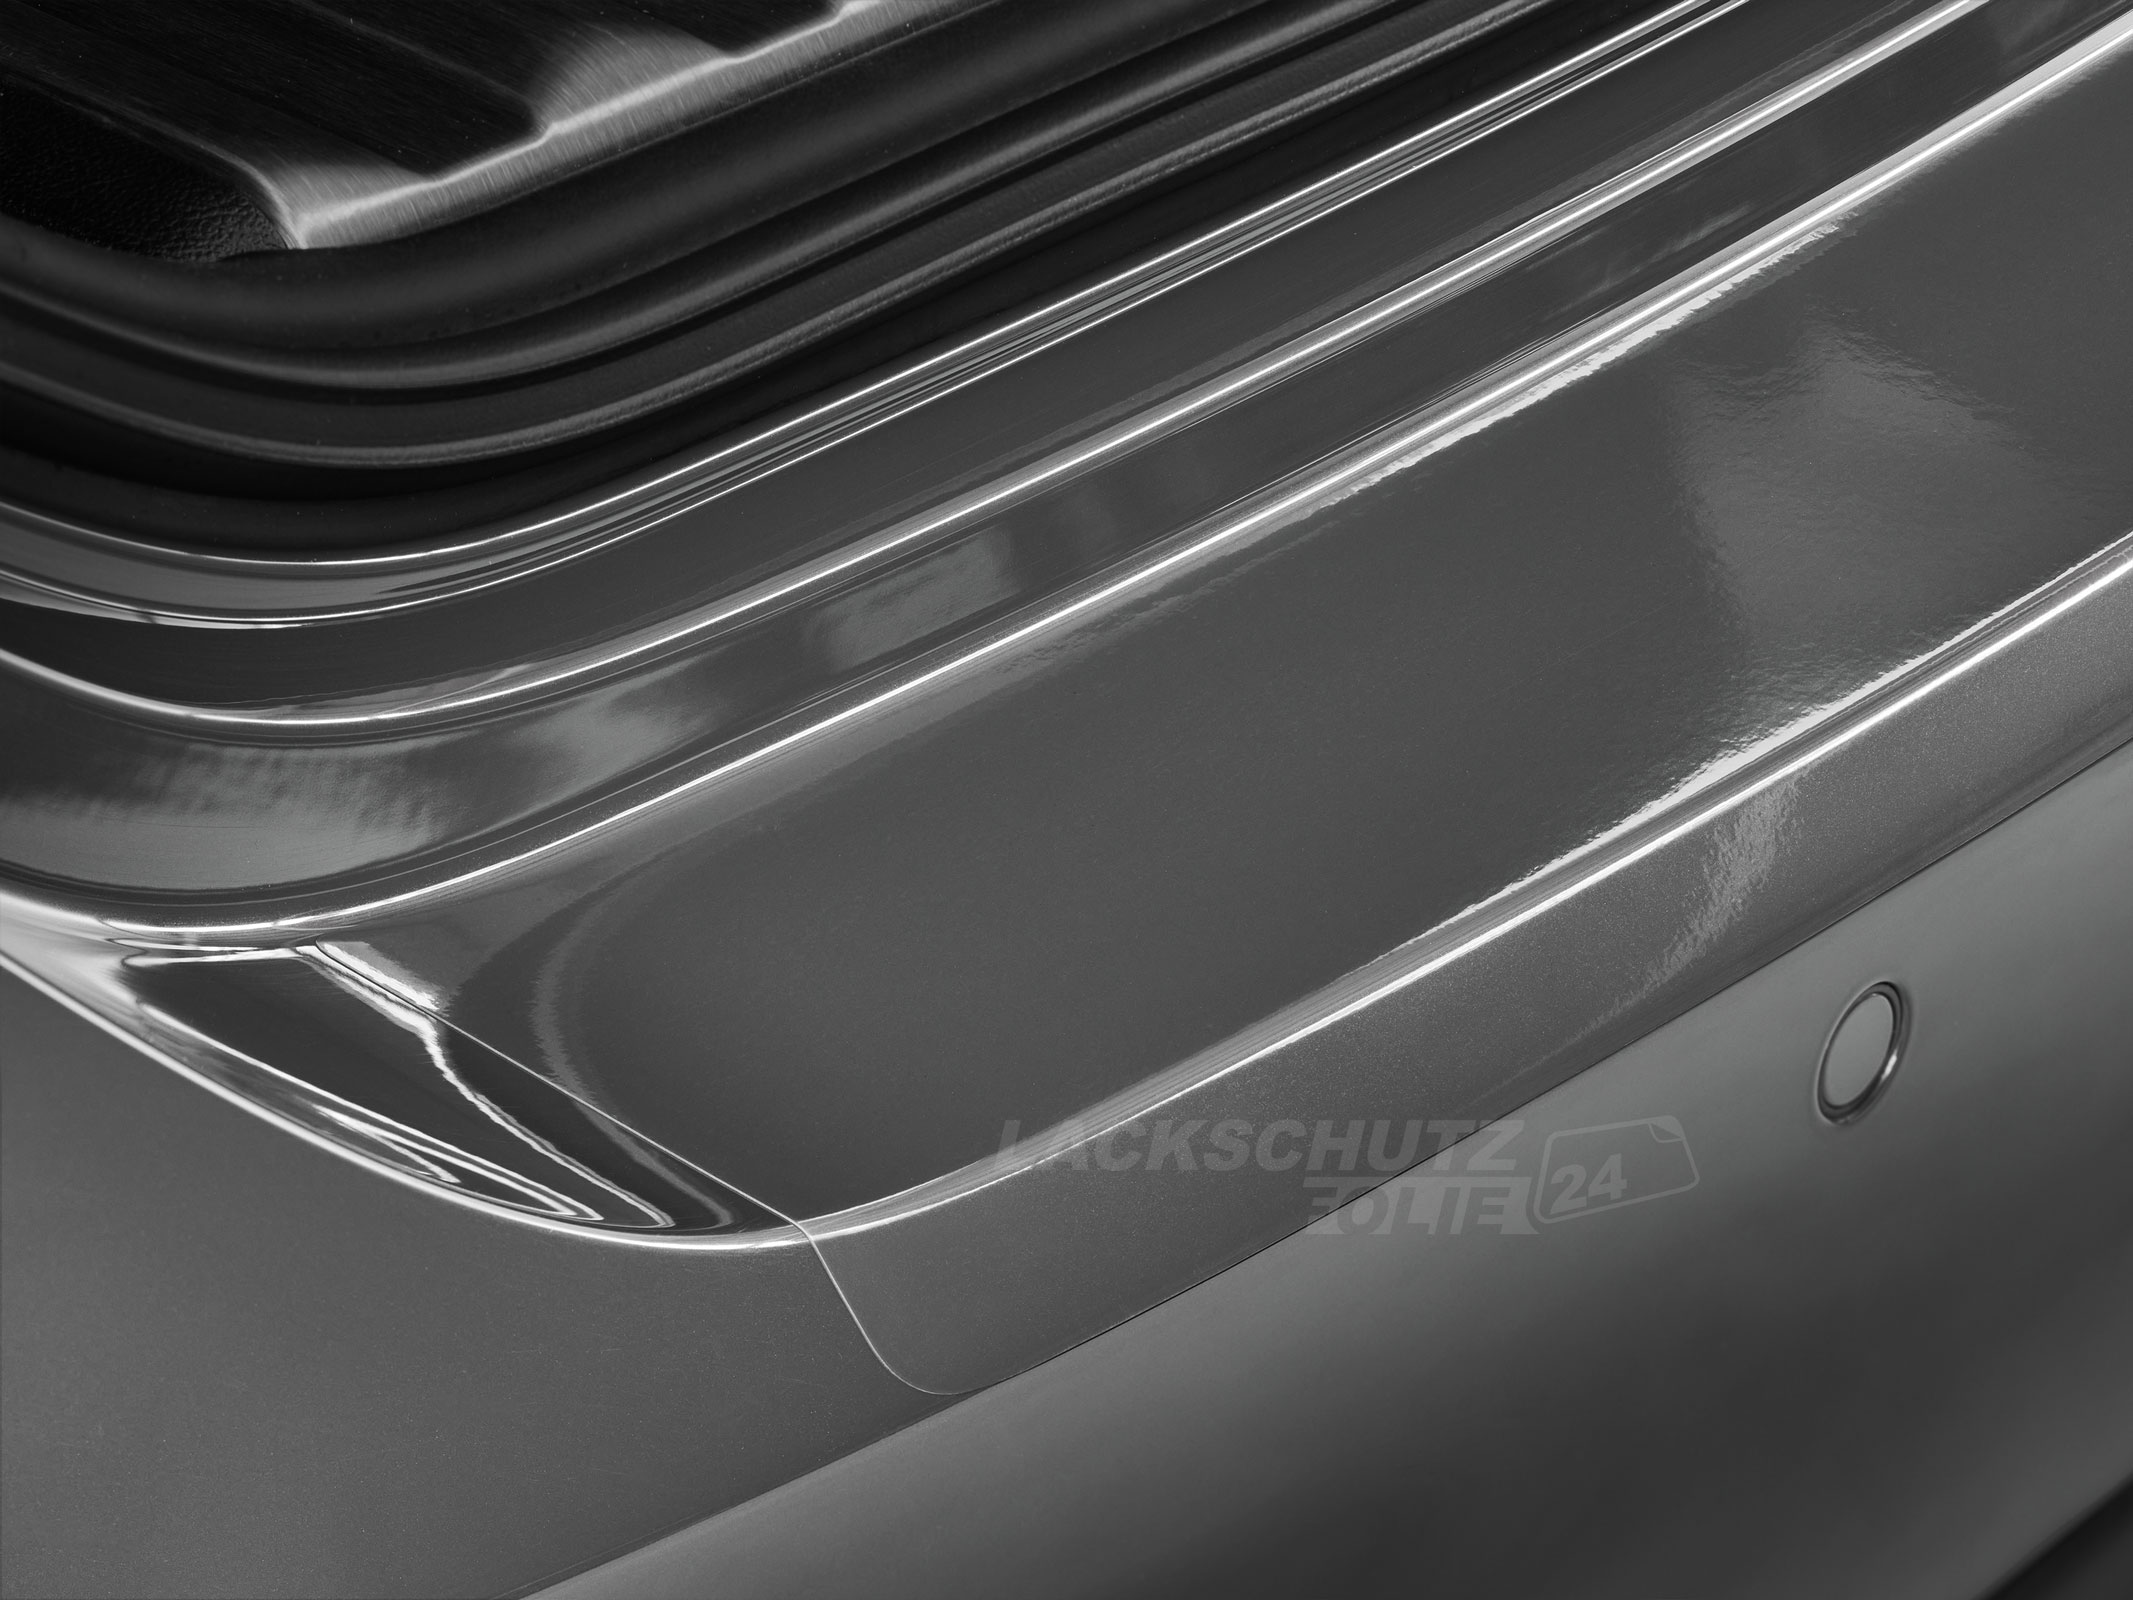 Ladekantenschutzfolie - Transparent Glatt Hochglänzend 240 µm stark für Dacia Duster (I) BJ 2010-12/2017